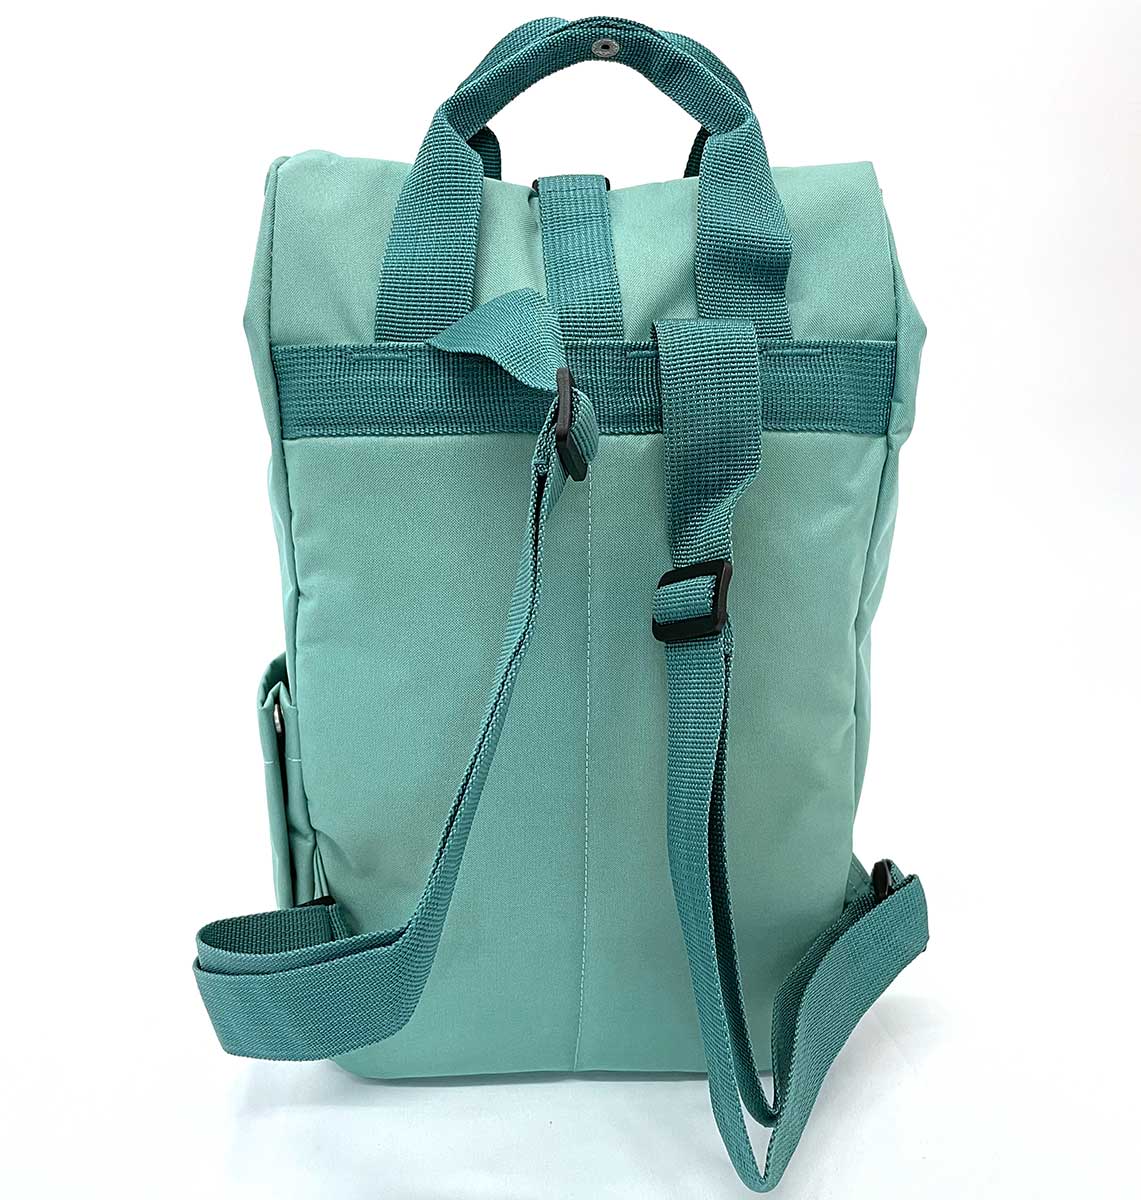 Orangutan Mini Roll-top Recycled Backpack - Blue Panda